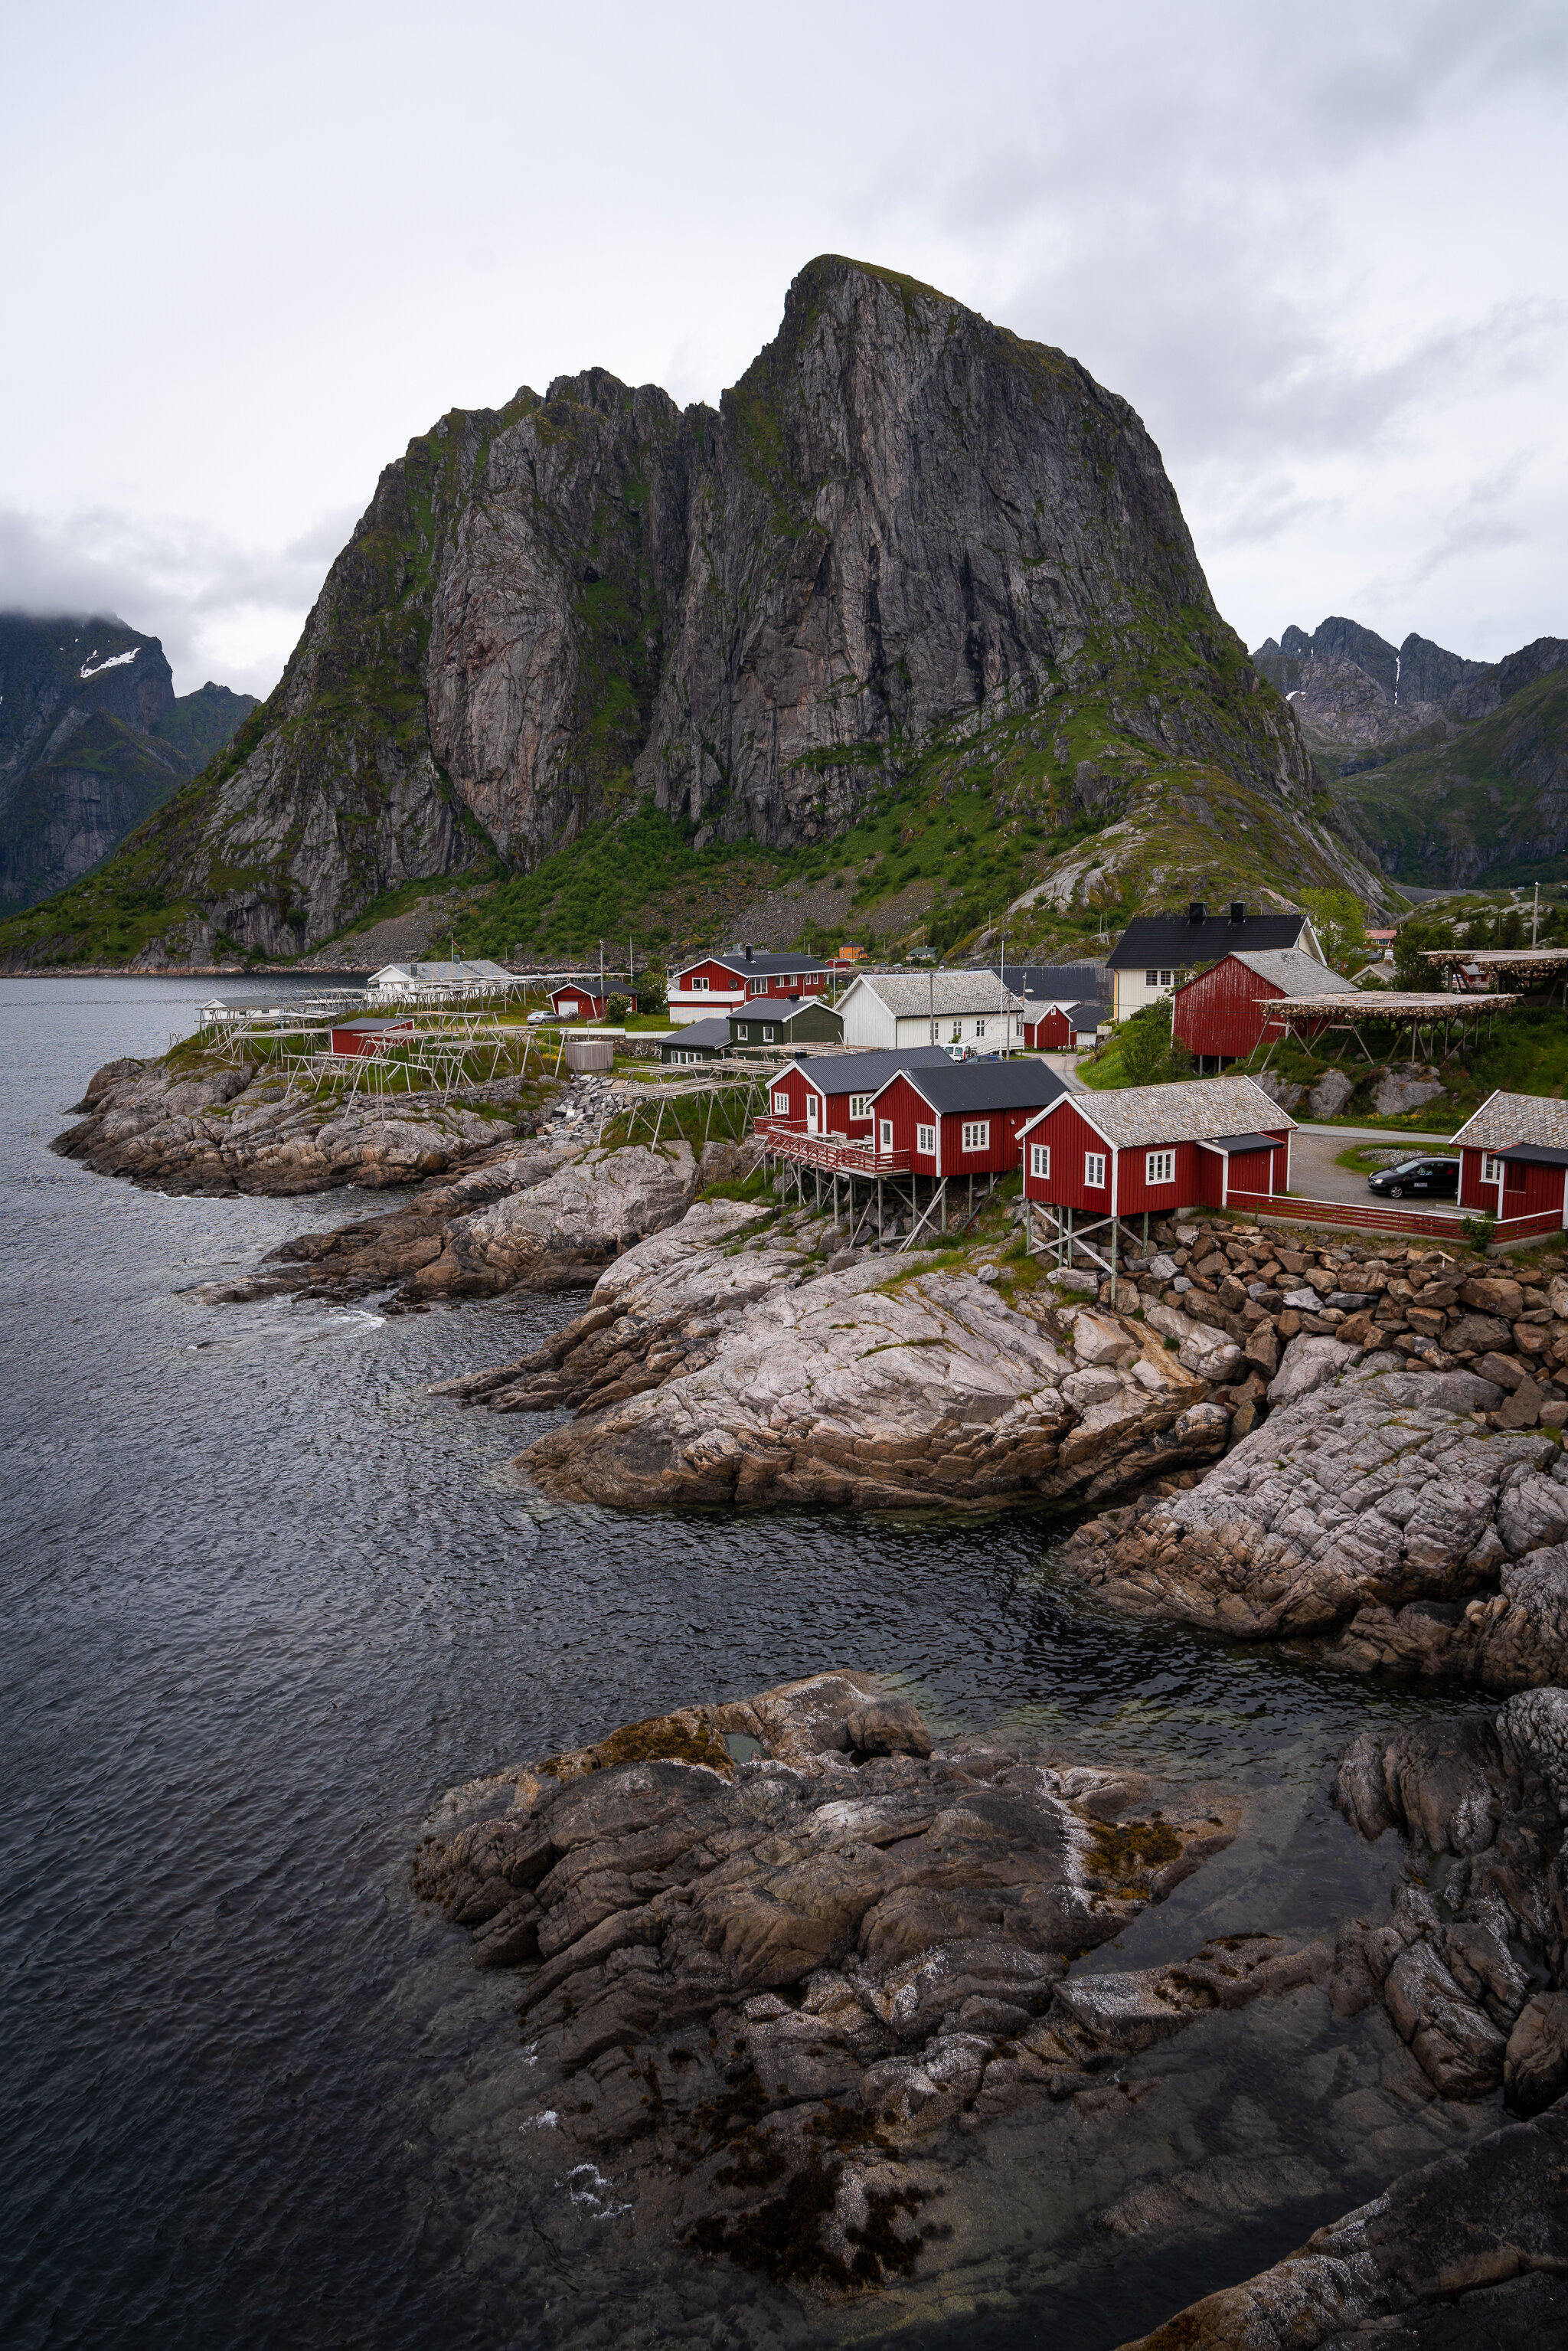 Hamnoy fishing village - best photo locations in Lofoten